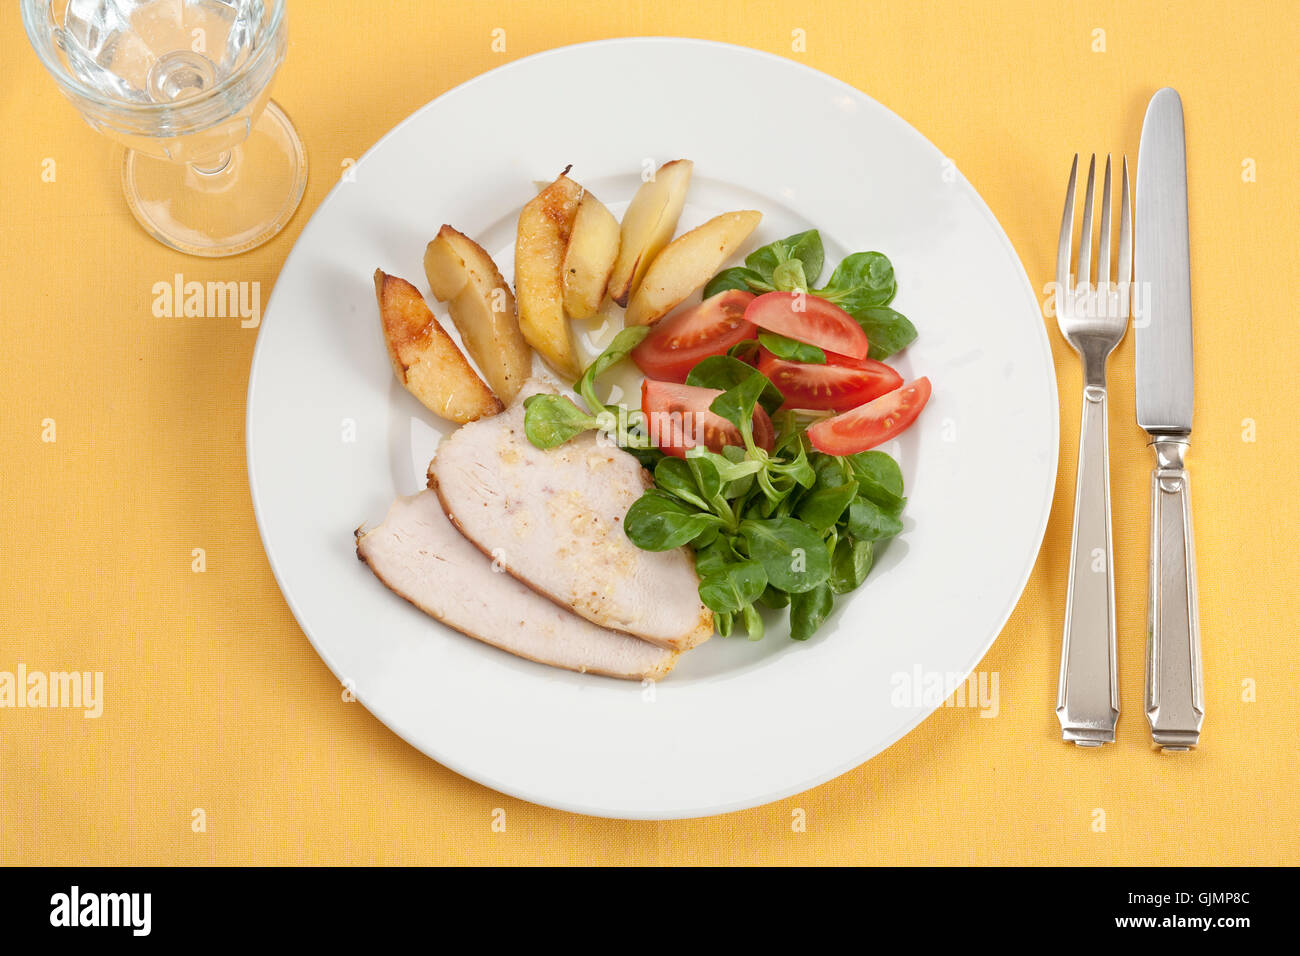 roast turkey with salad and potato gap Stock Photo